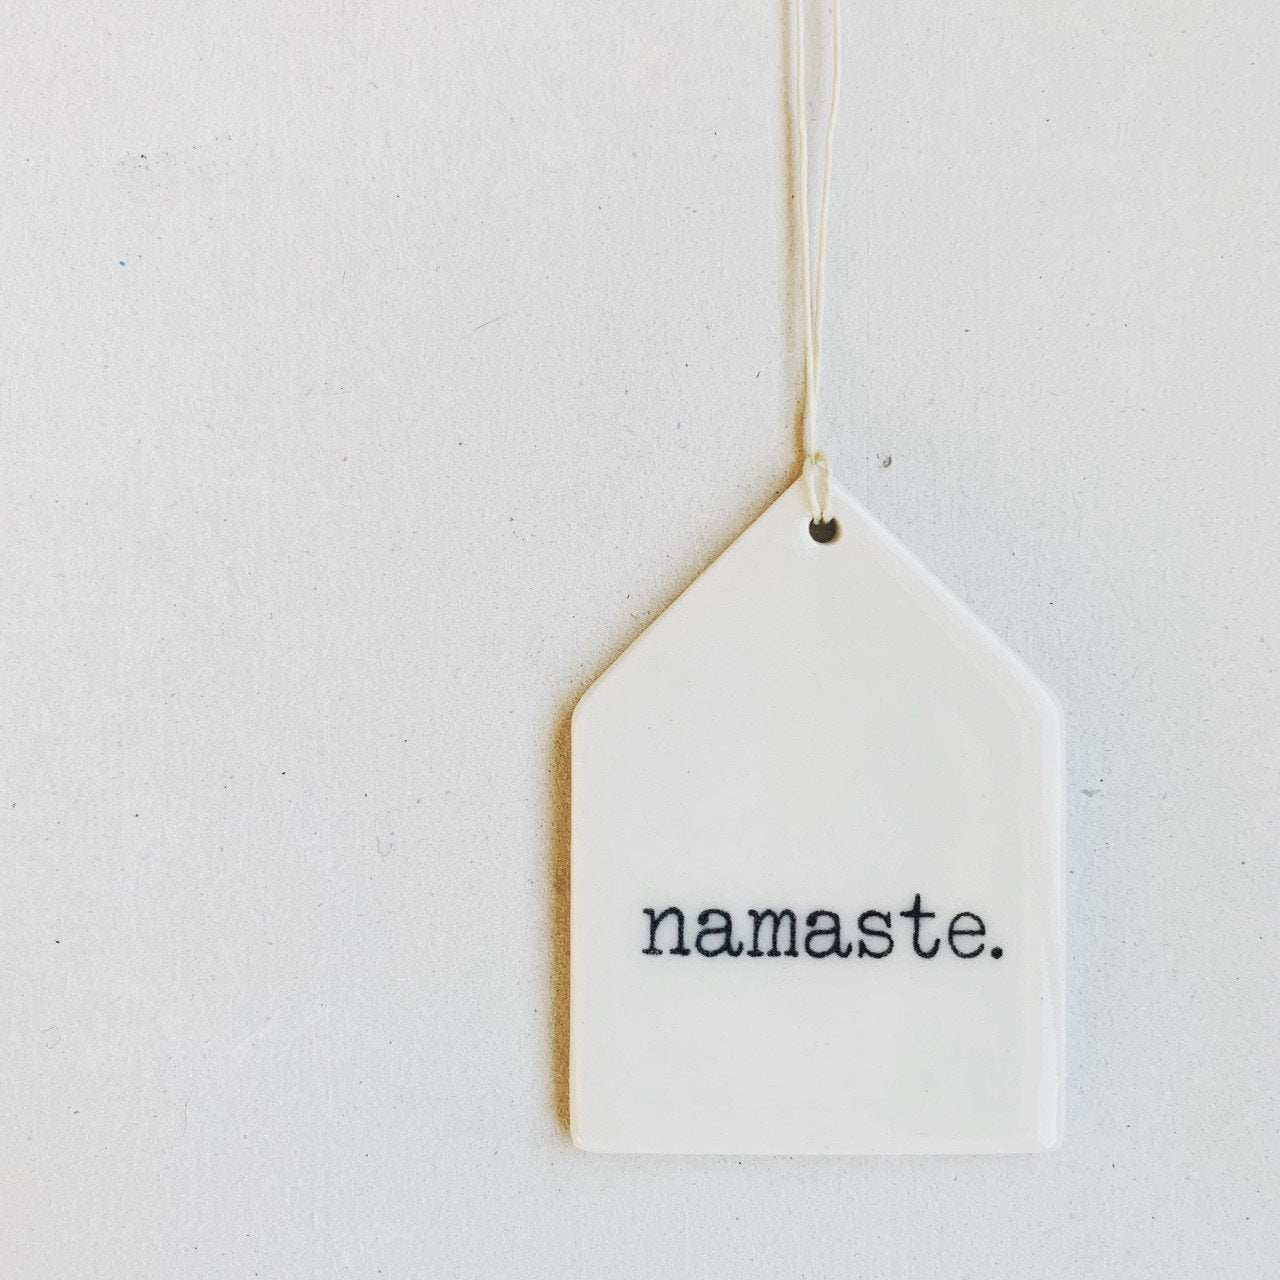 namaste quote | namaste wall art | yoga art | ceramic wall tag | minimalist design | home decor | meaningful gift